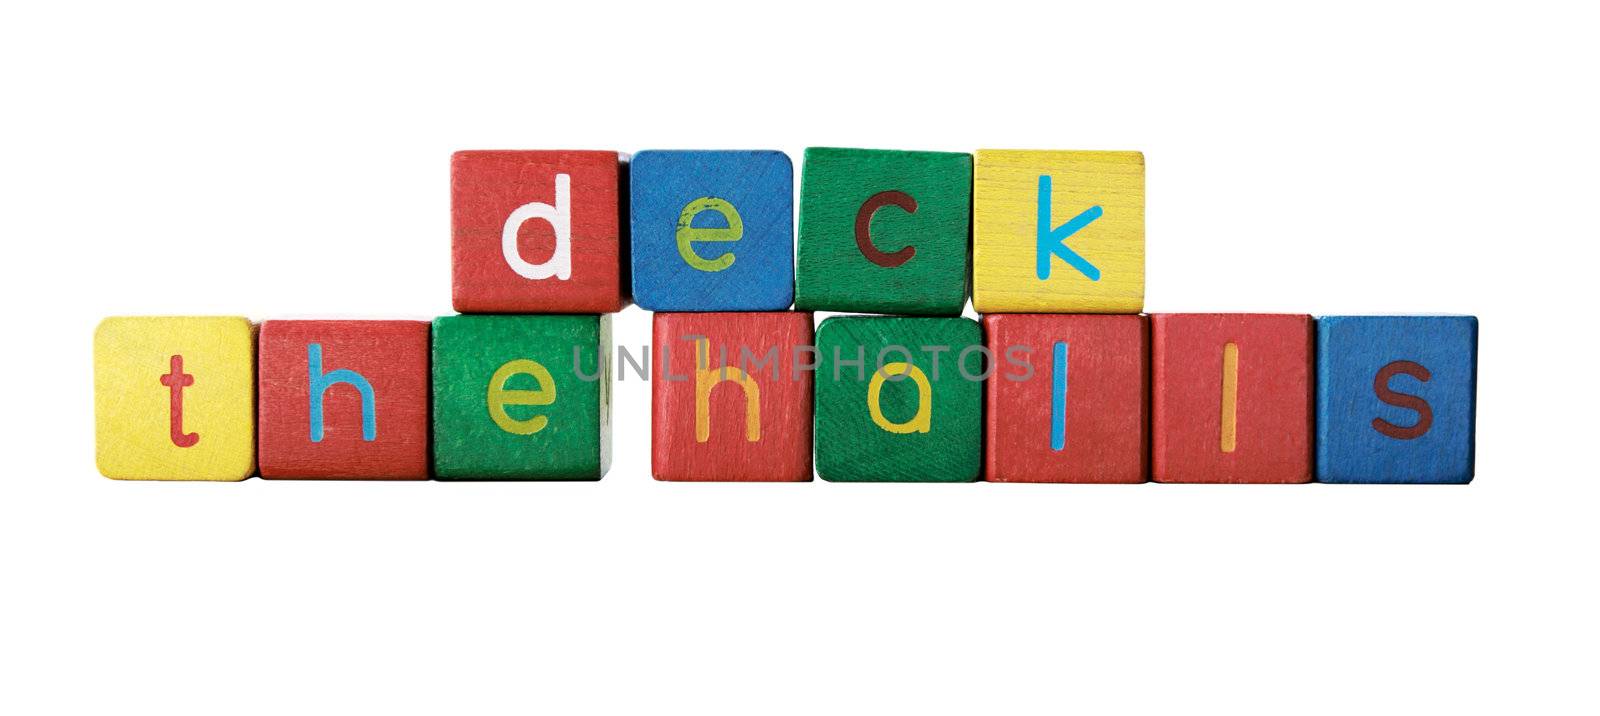 deck the halls in children's block letters by nebari